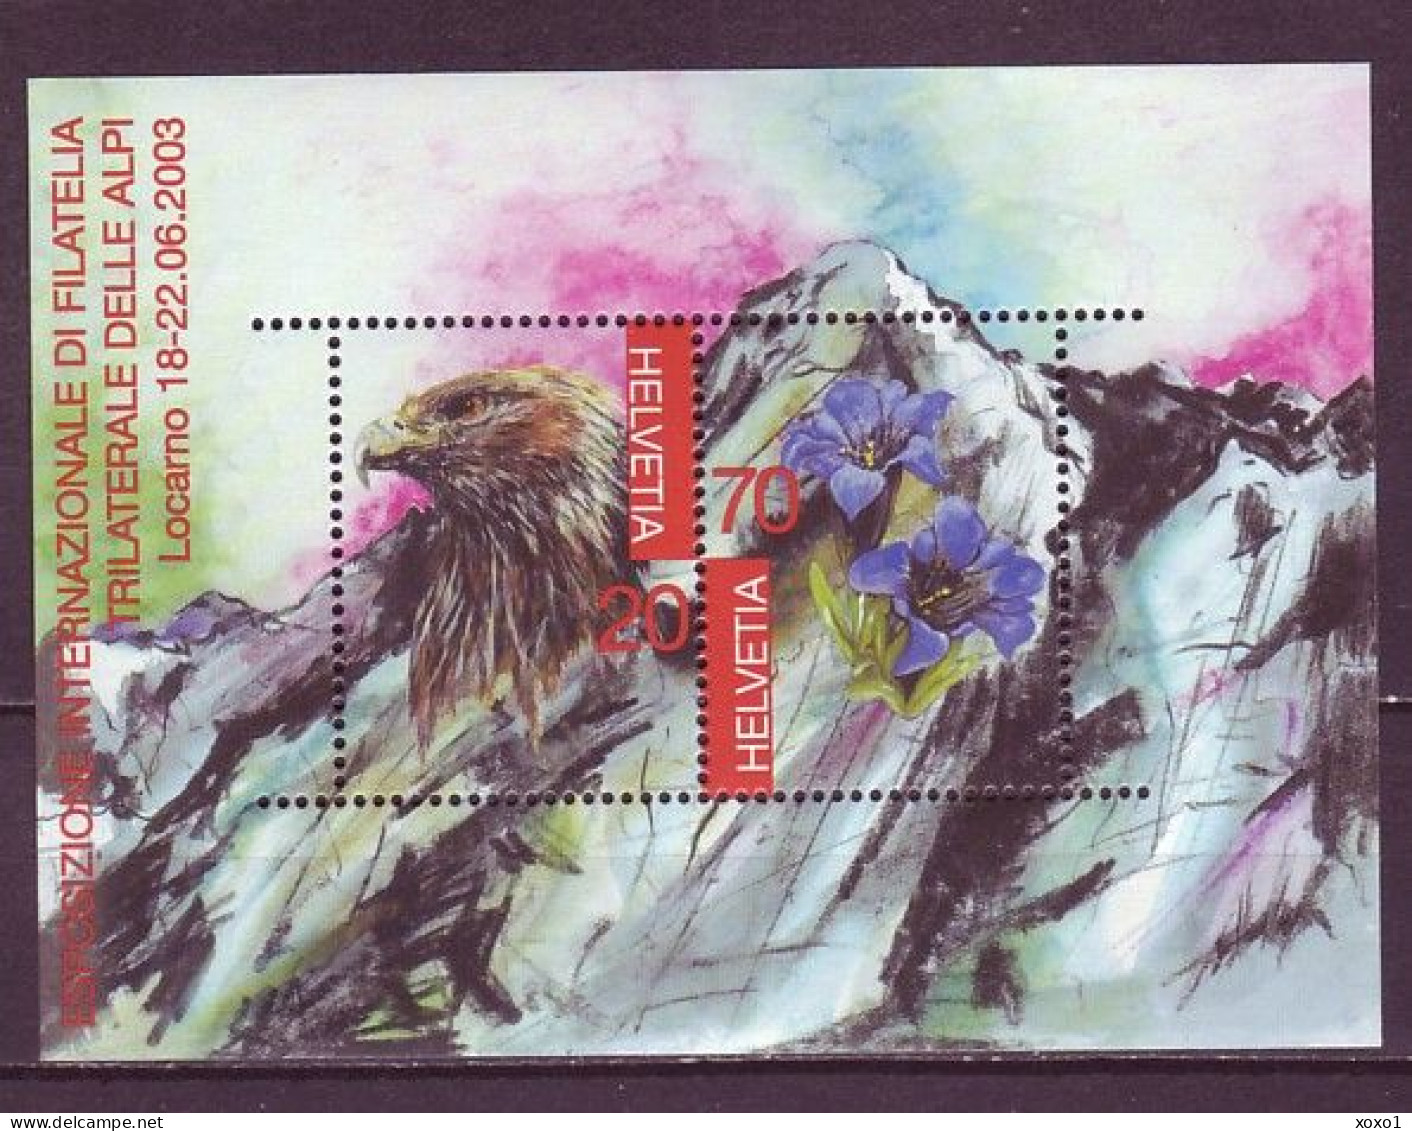 Switzerland 2003 MiNr. 1836 - 1837 (Block 33) Mont Dolent France–Switzerland–Italy Border Triangle S\sh MNH** 2.00 € - Montagnes